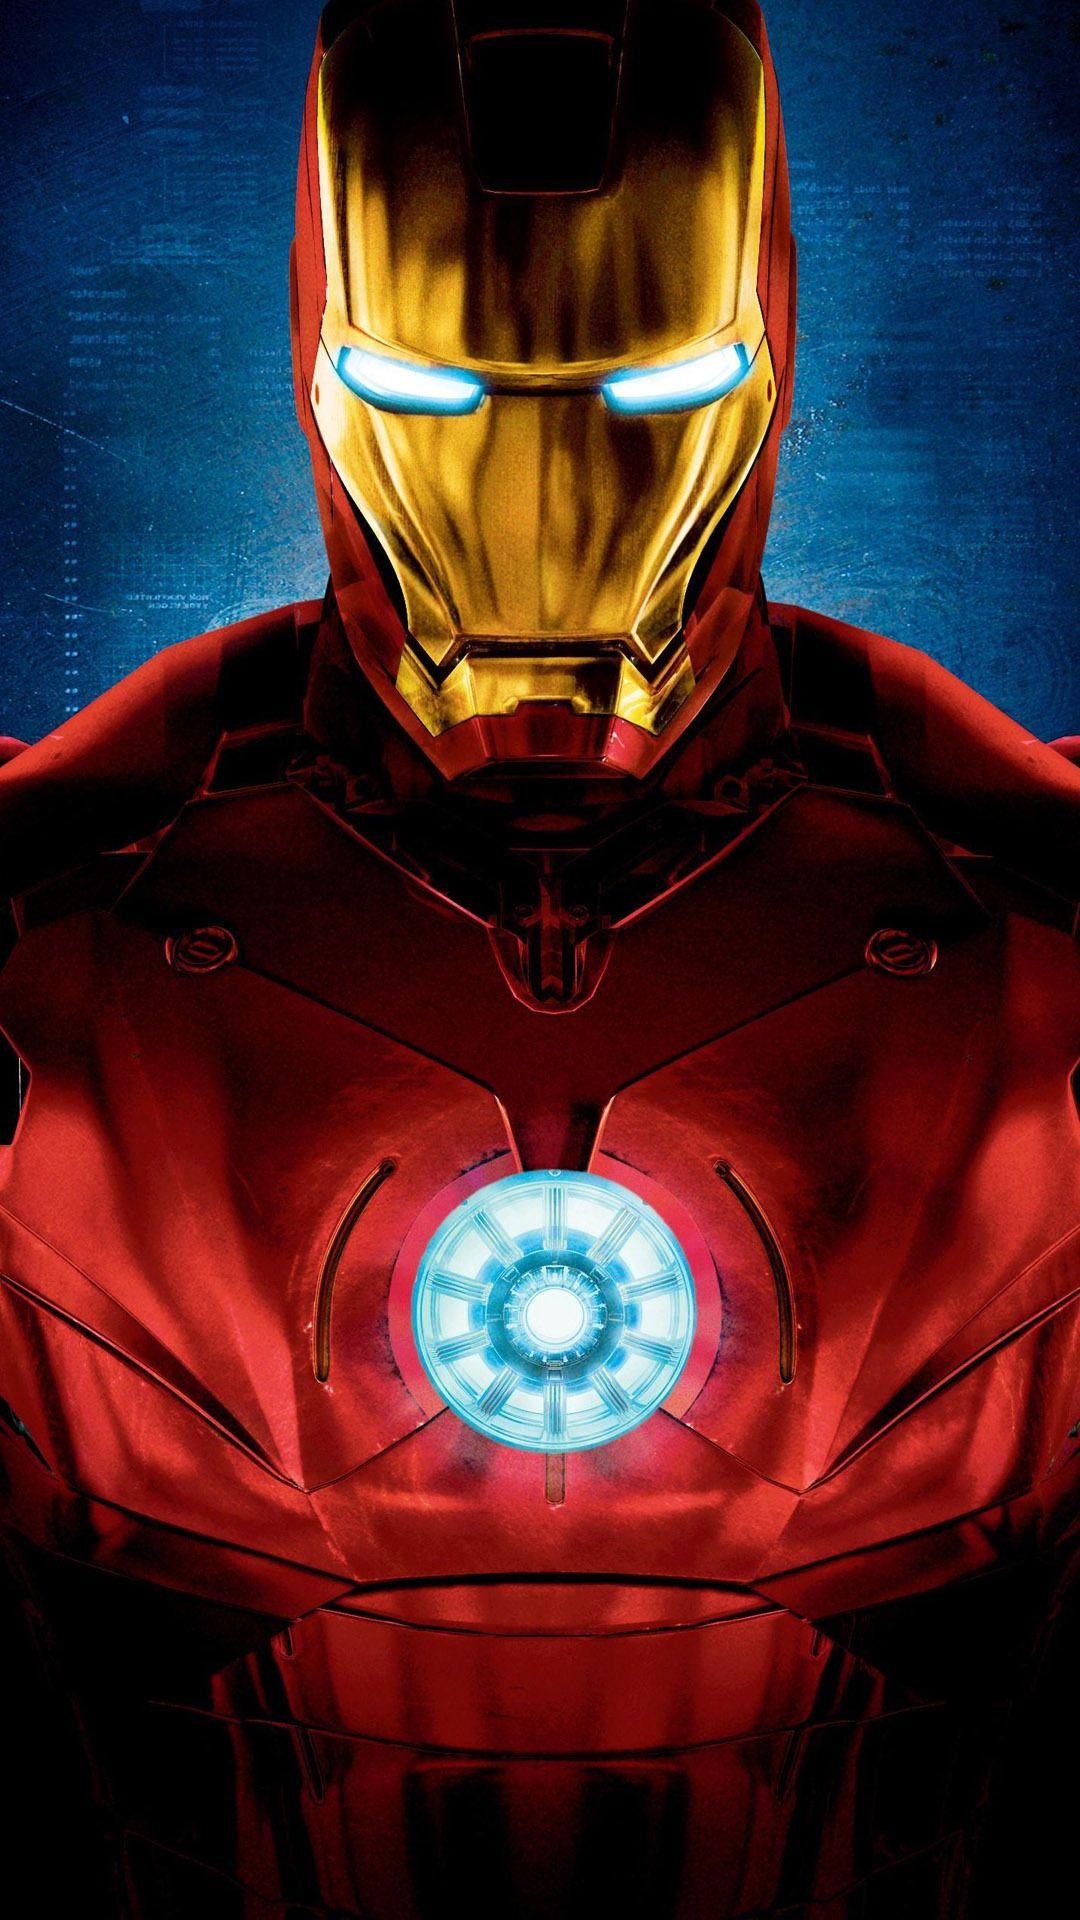 Iron man suit. Iron man HD wallpaper, Iron man wallpaper, Iron